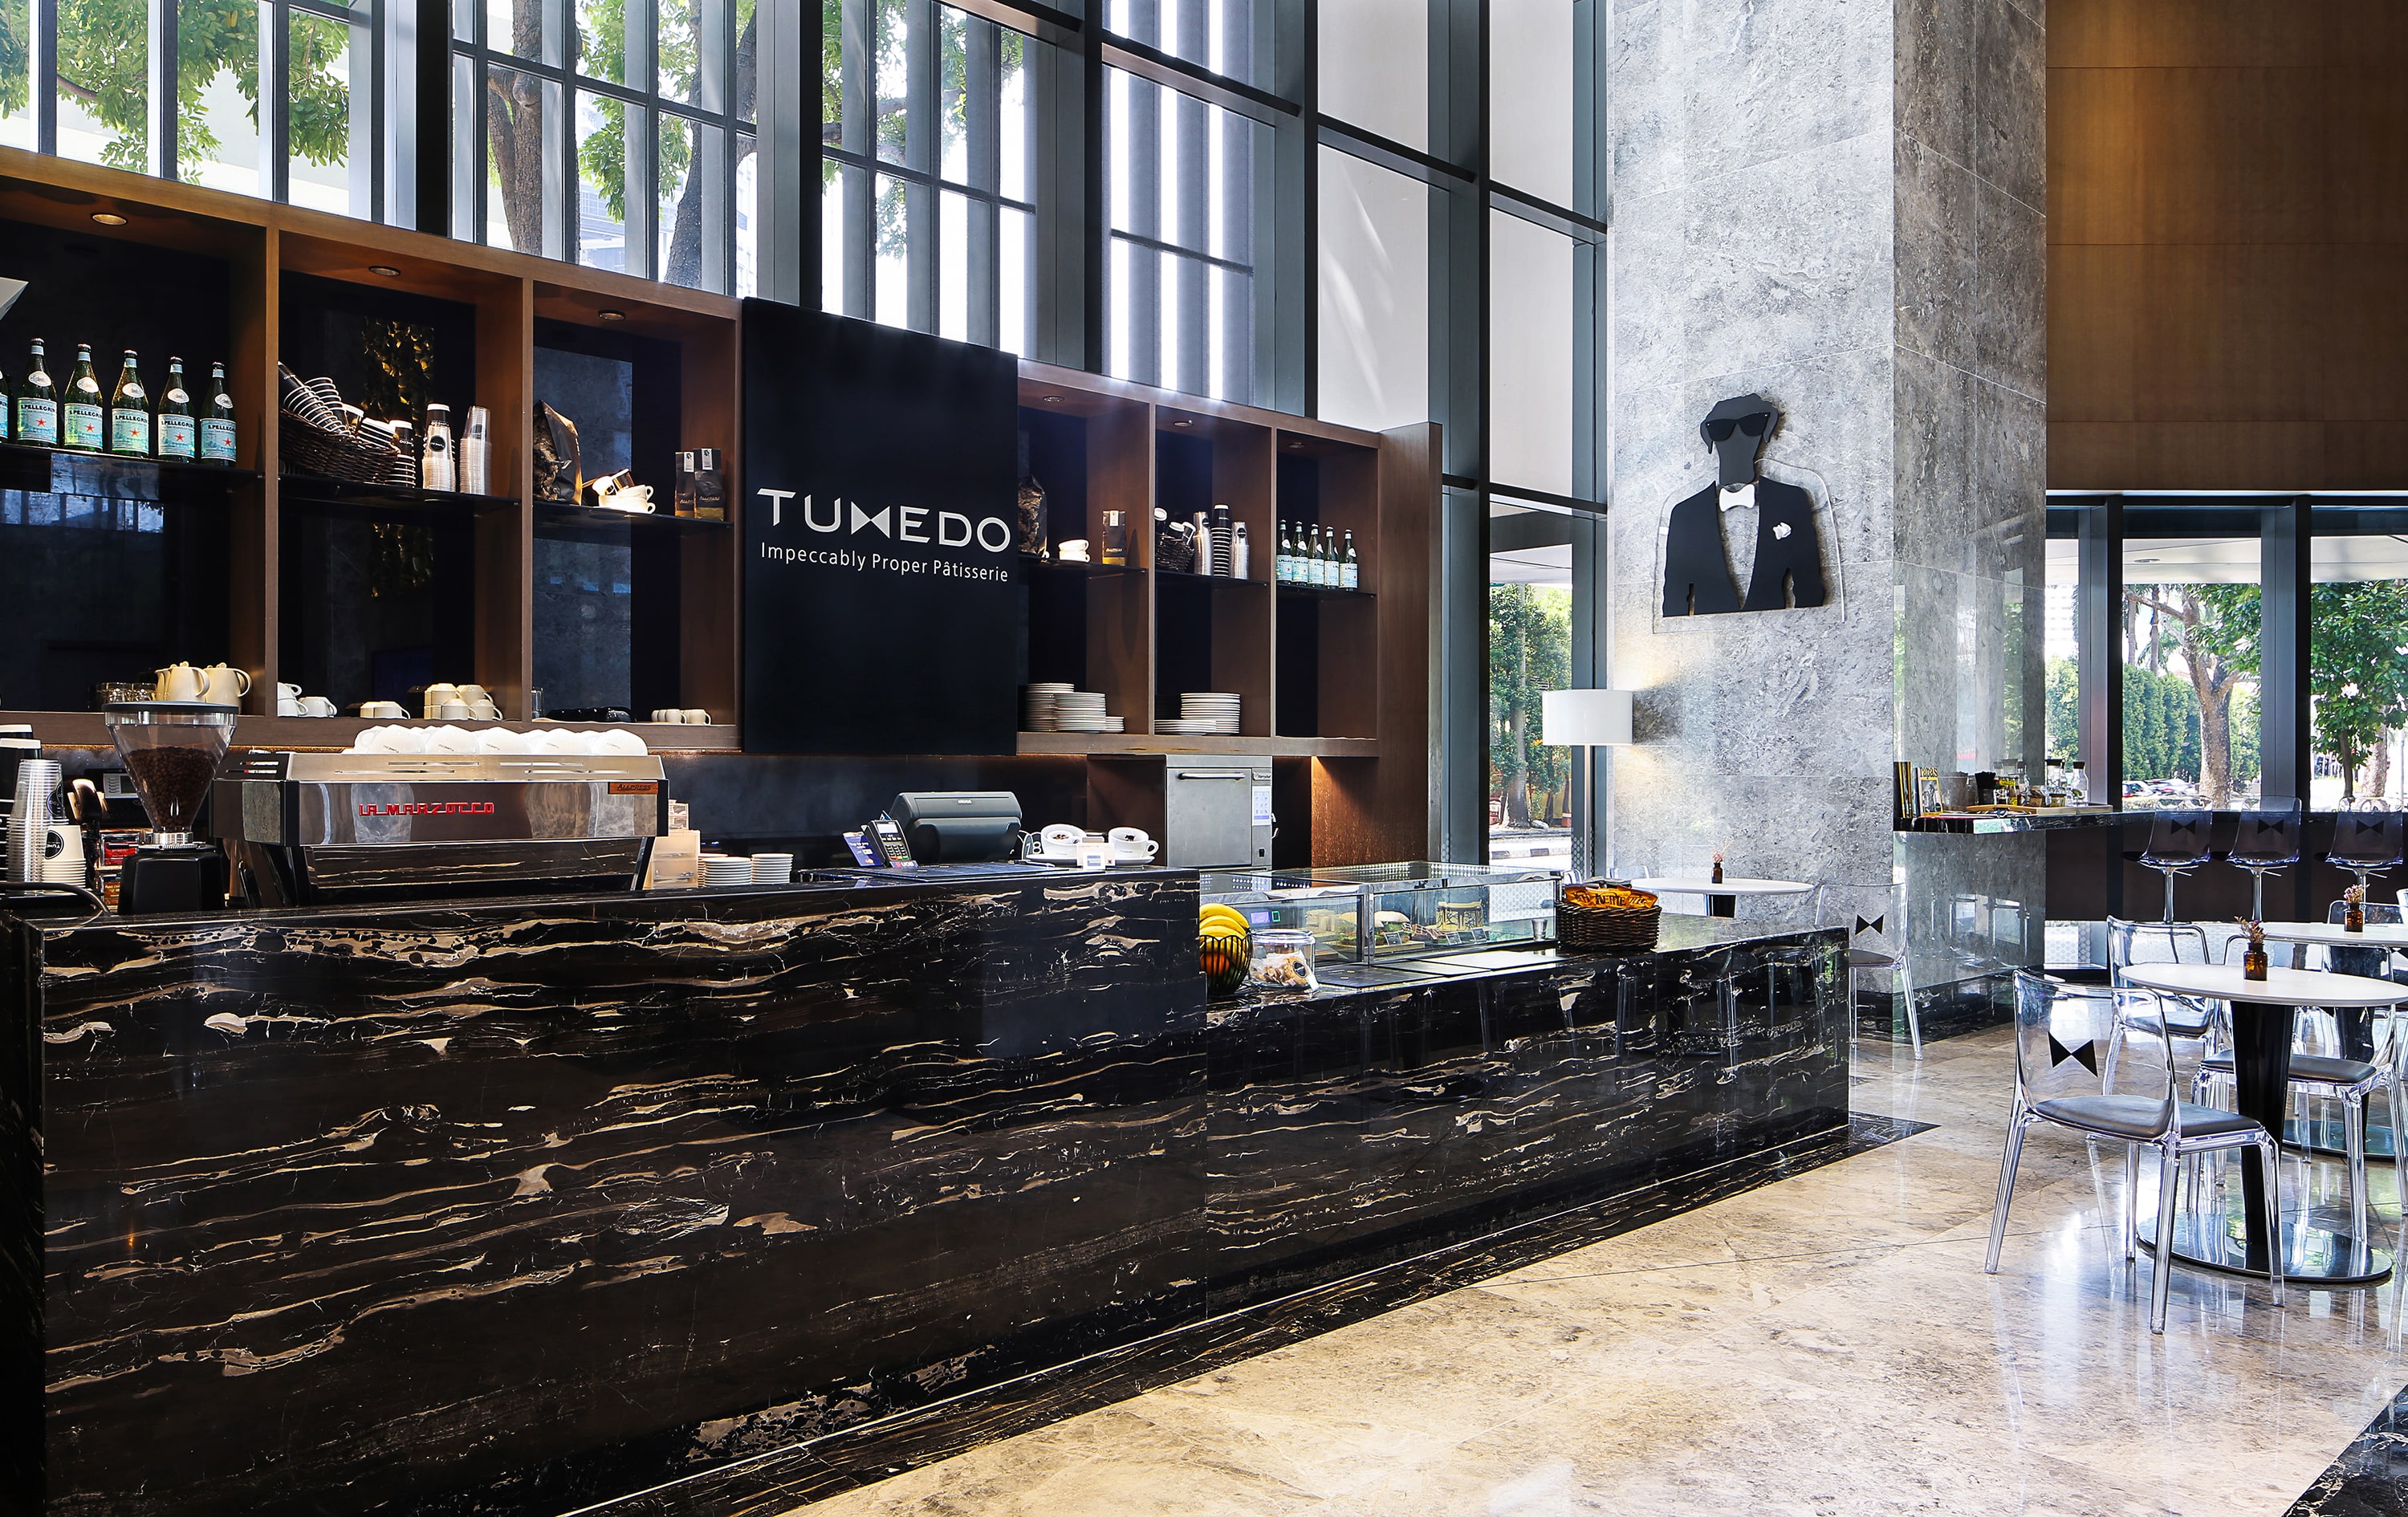 Tuxedo Carlton City Hotel Singapore Burpple 35 Reviews Tanjong Pagar Singapore